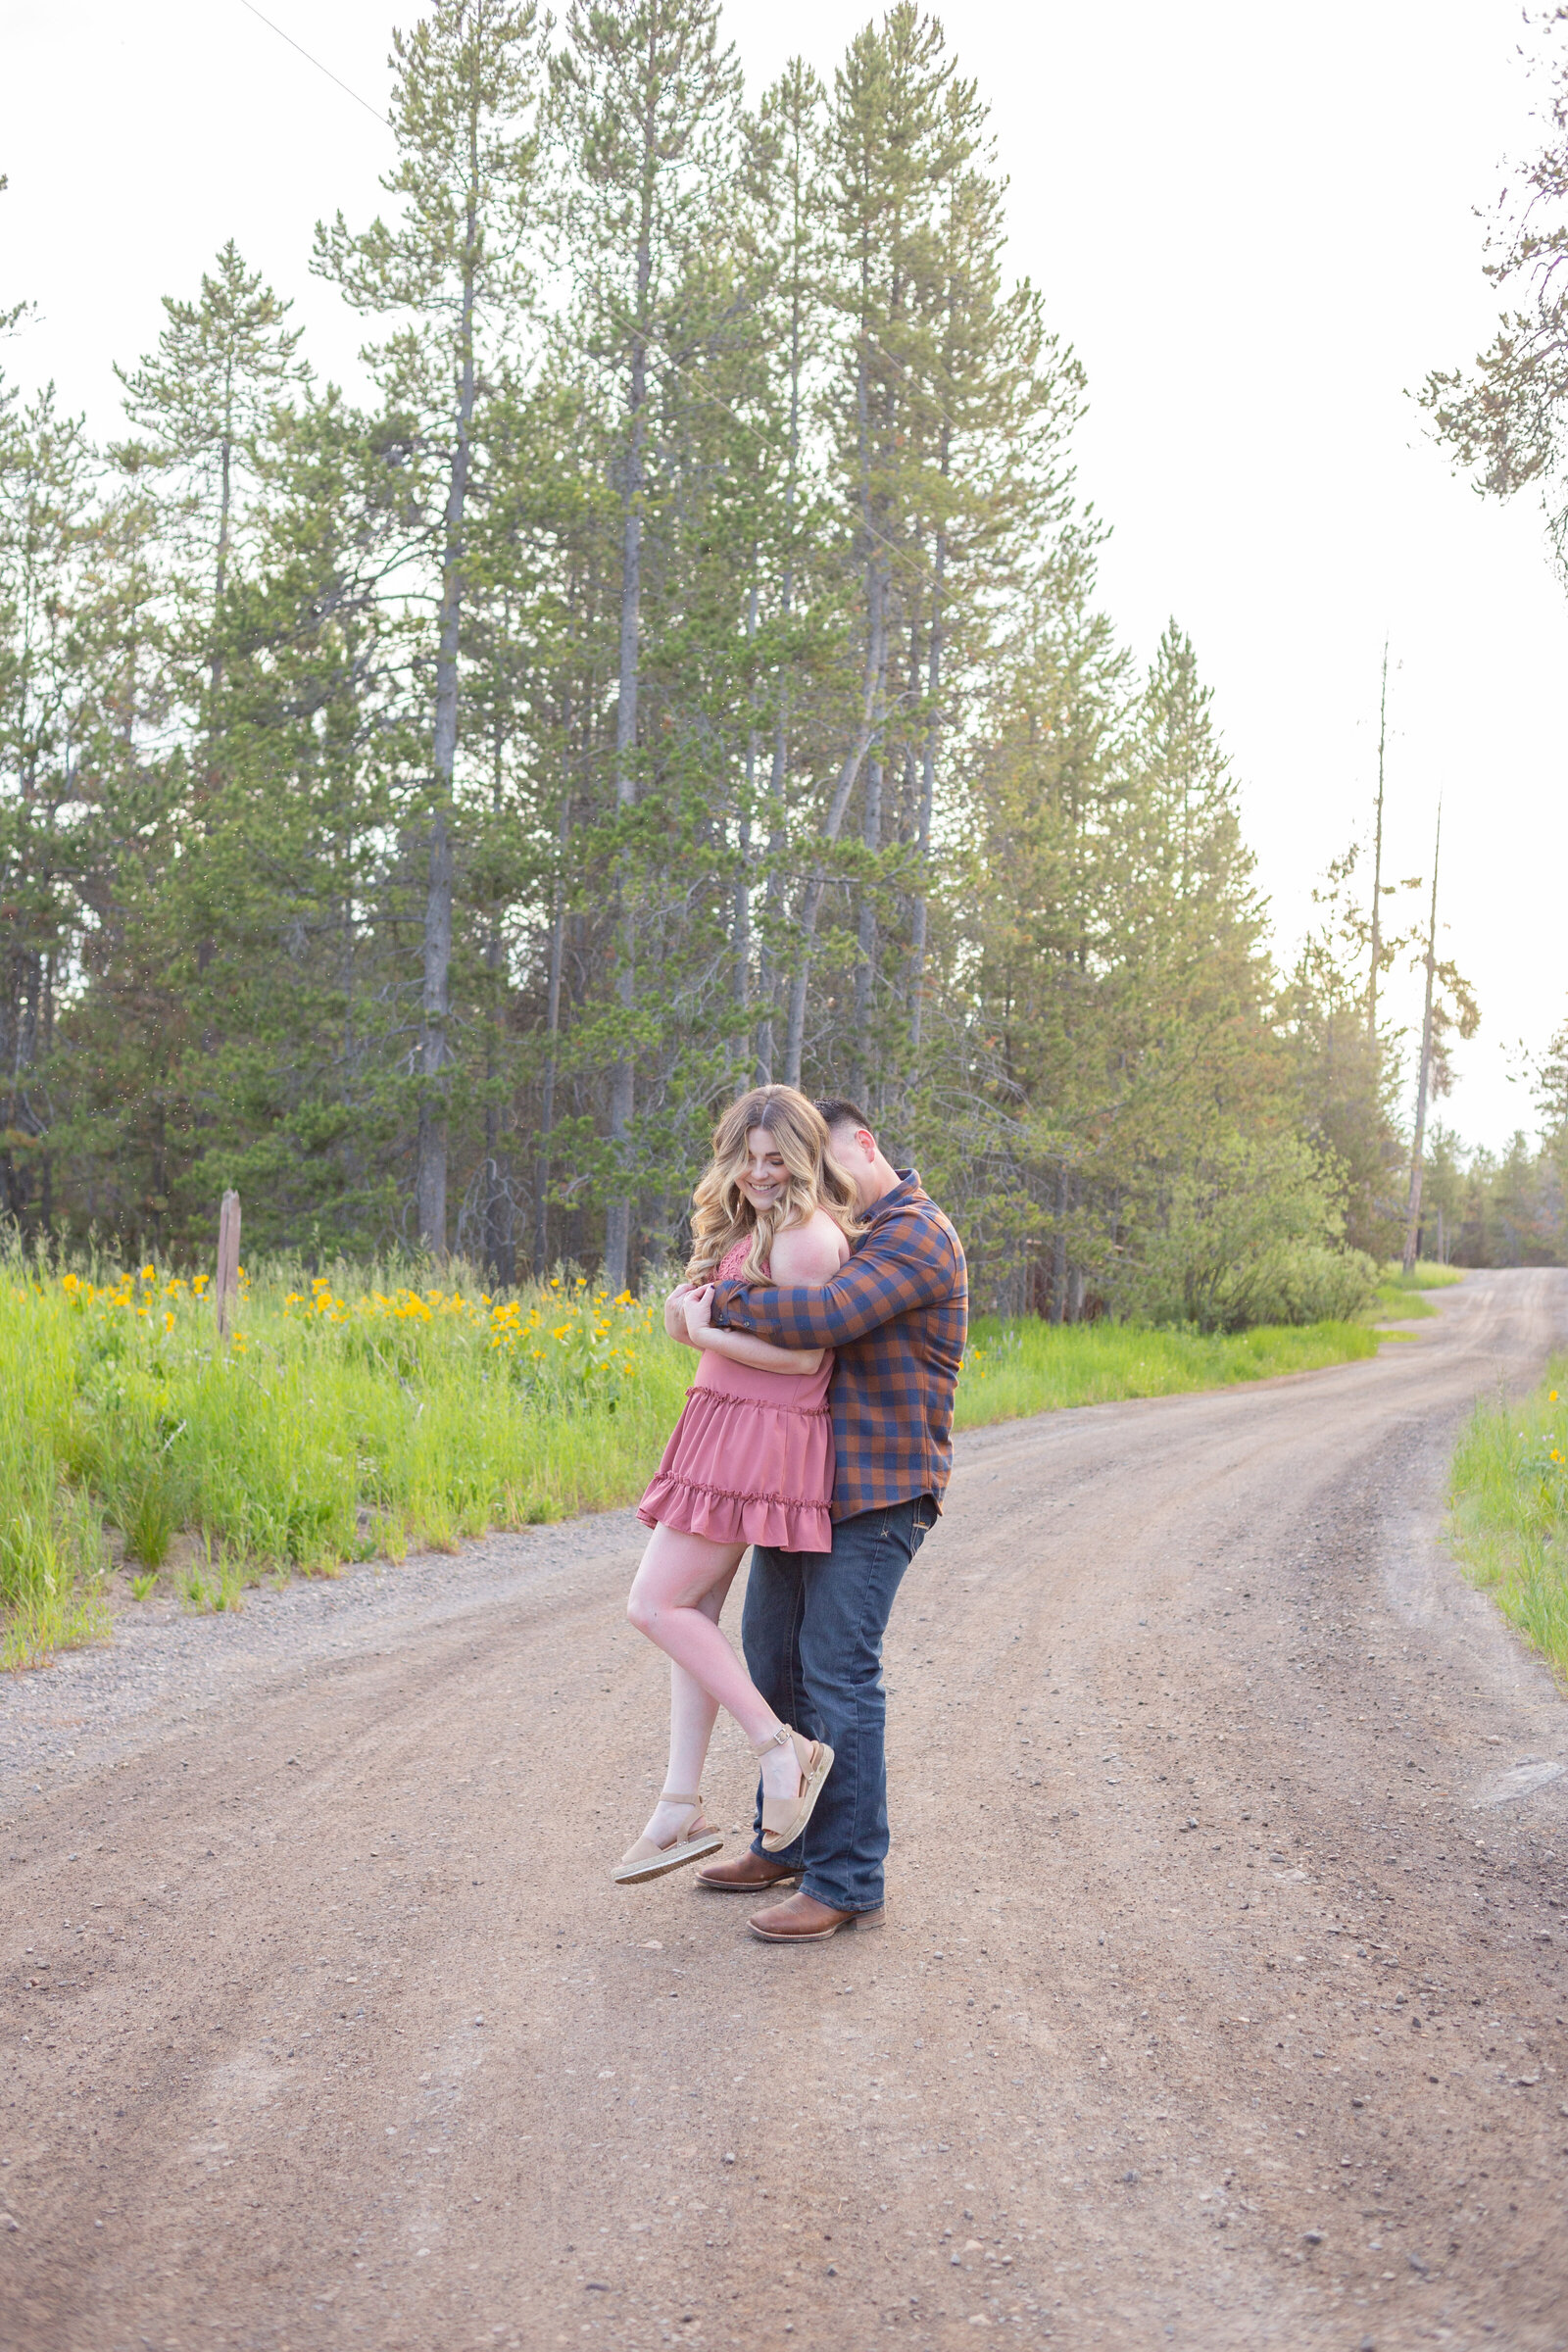 Washington Elopement Photographer captures man lifting woman during engagements